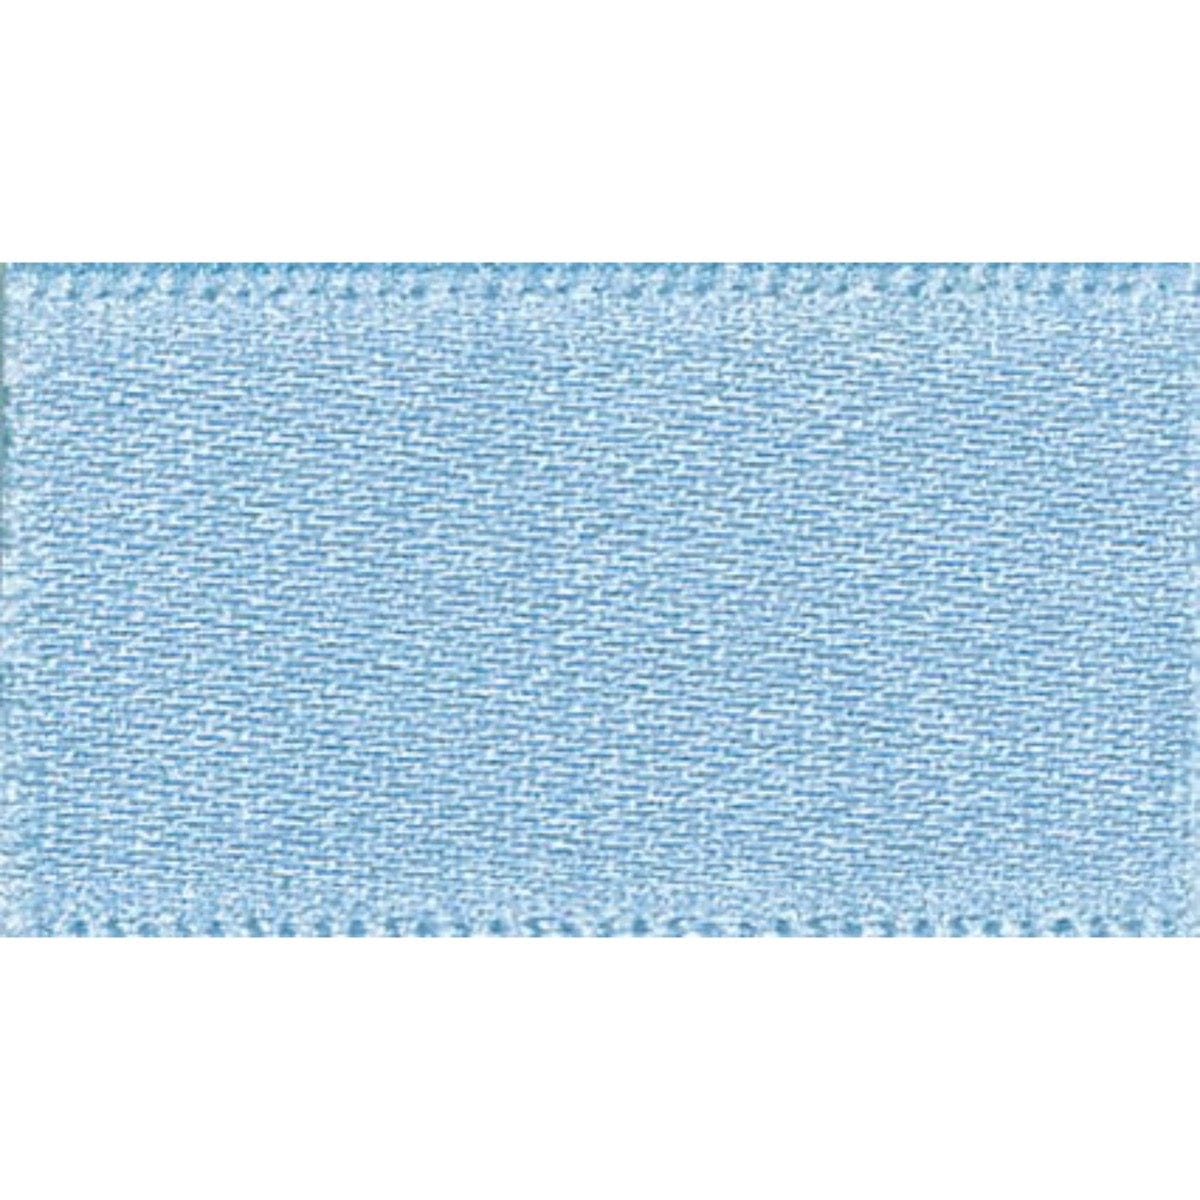 Double Faced Satin Ribbon Cornflower Blue: 3mm wide. Price per metre.